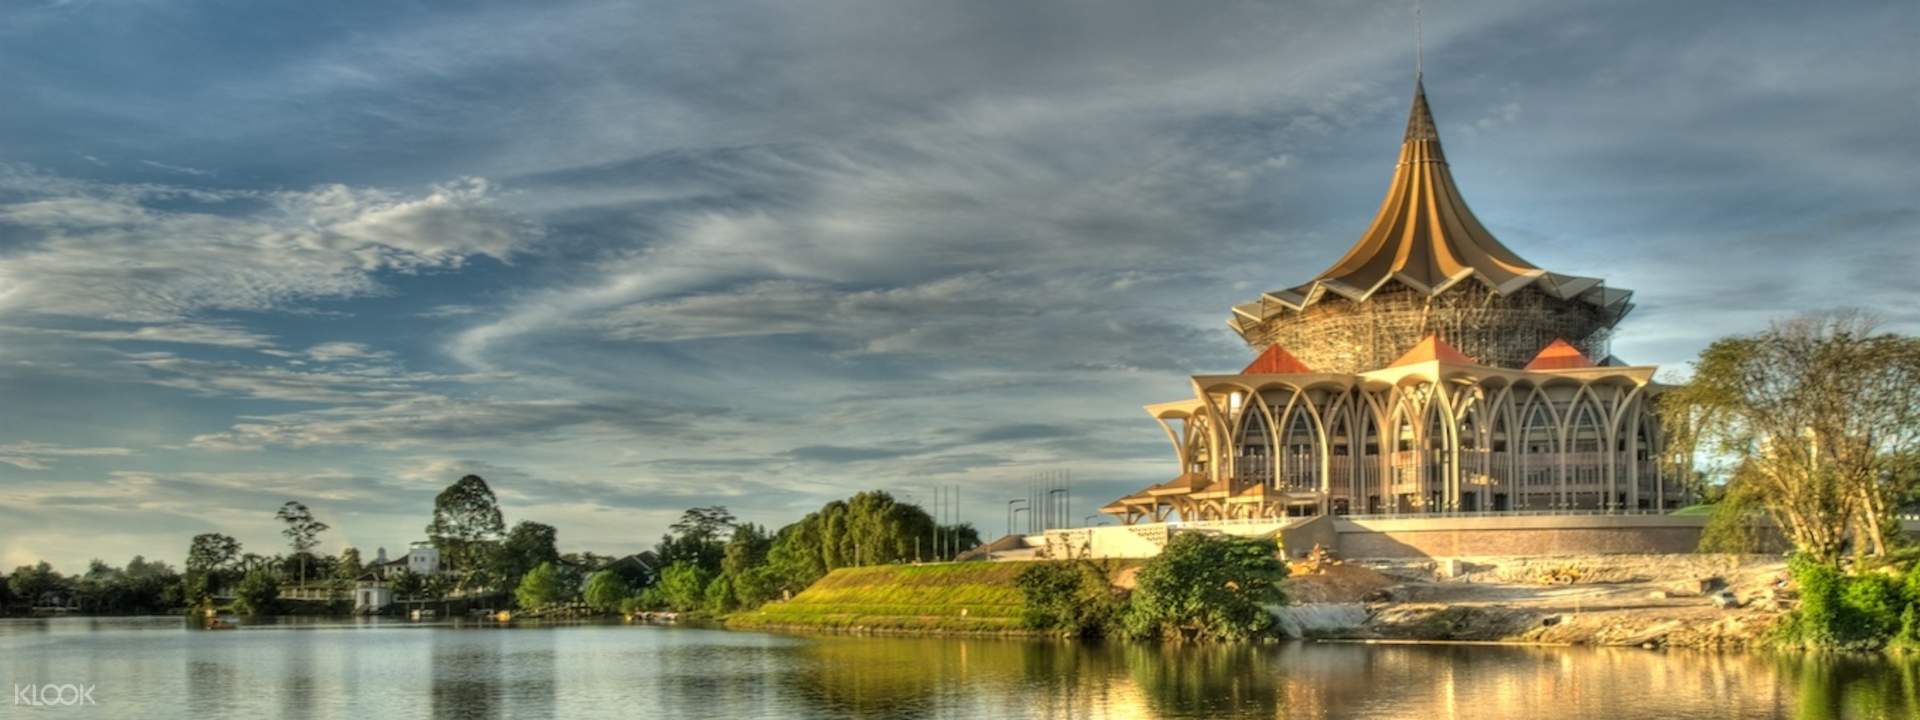 City Link Kuching Sarawak : A Guide to Kuching in Sarawak, Malaysian